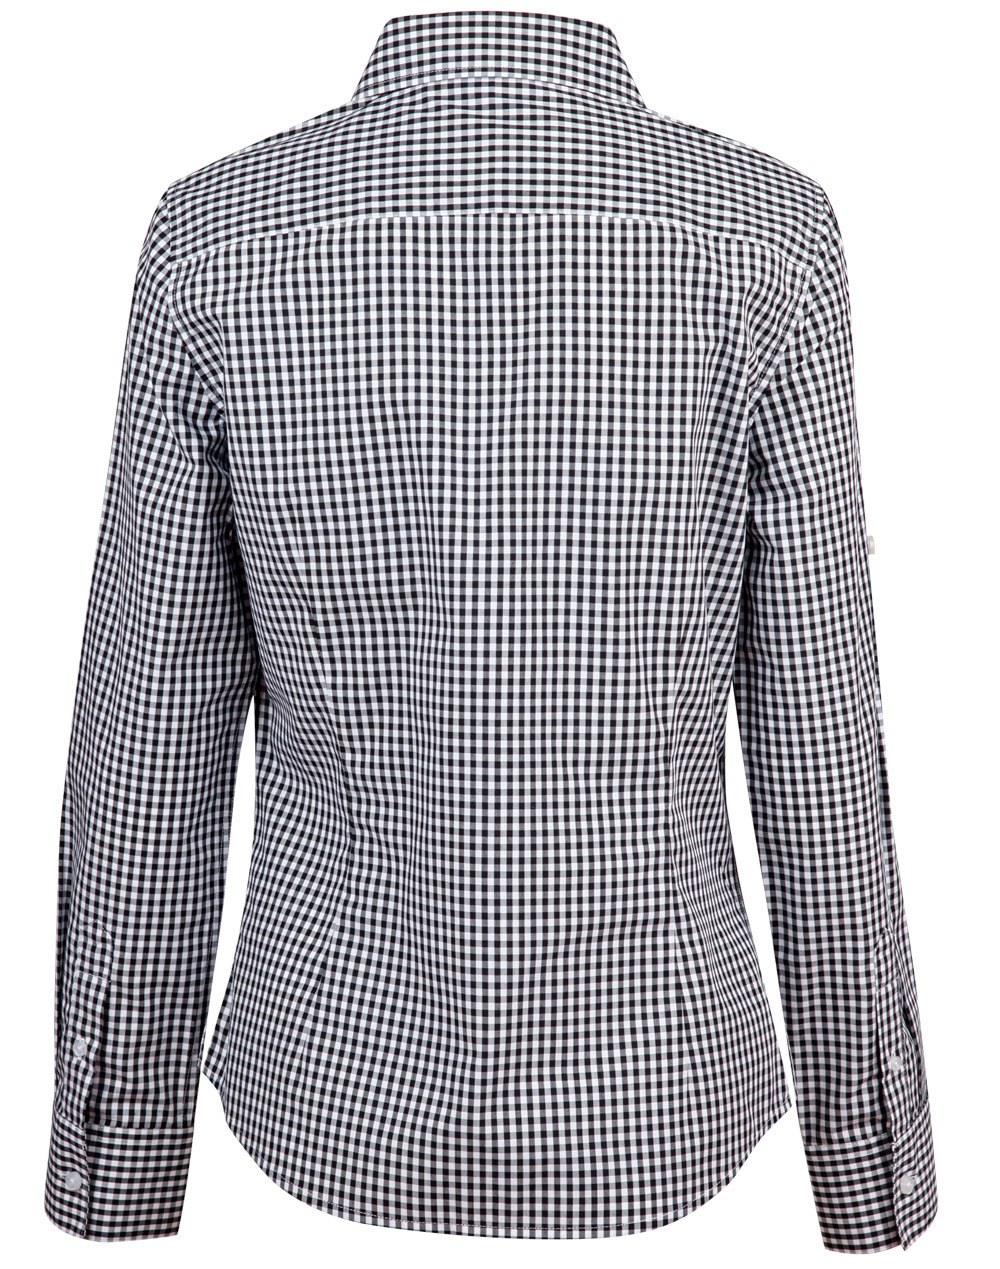 Benchmark M8300L Ladies Gingham Check Long Sleeve Shirt | Fast Clothing